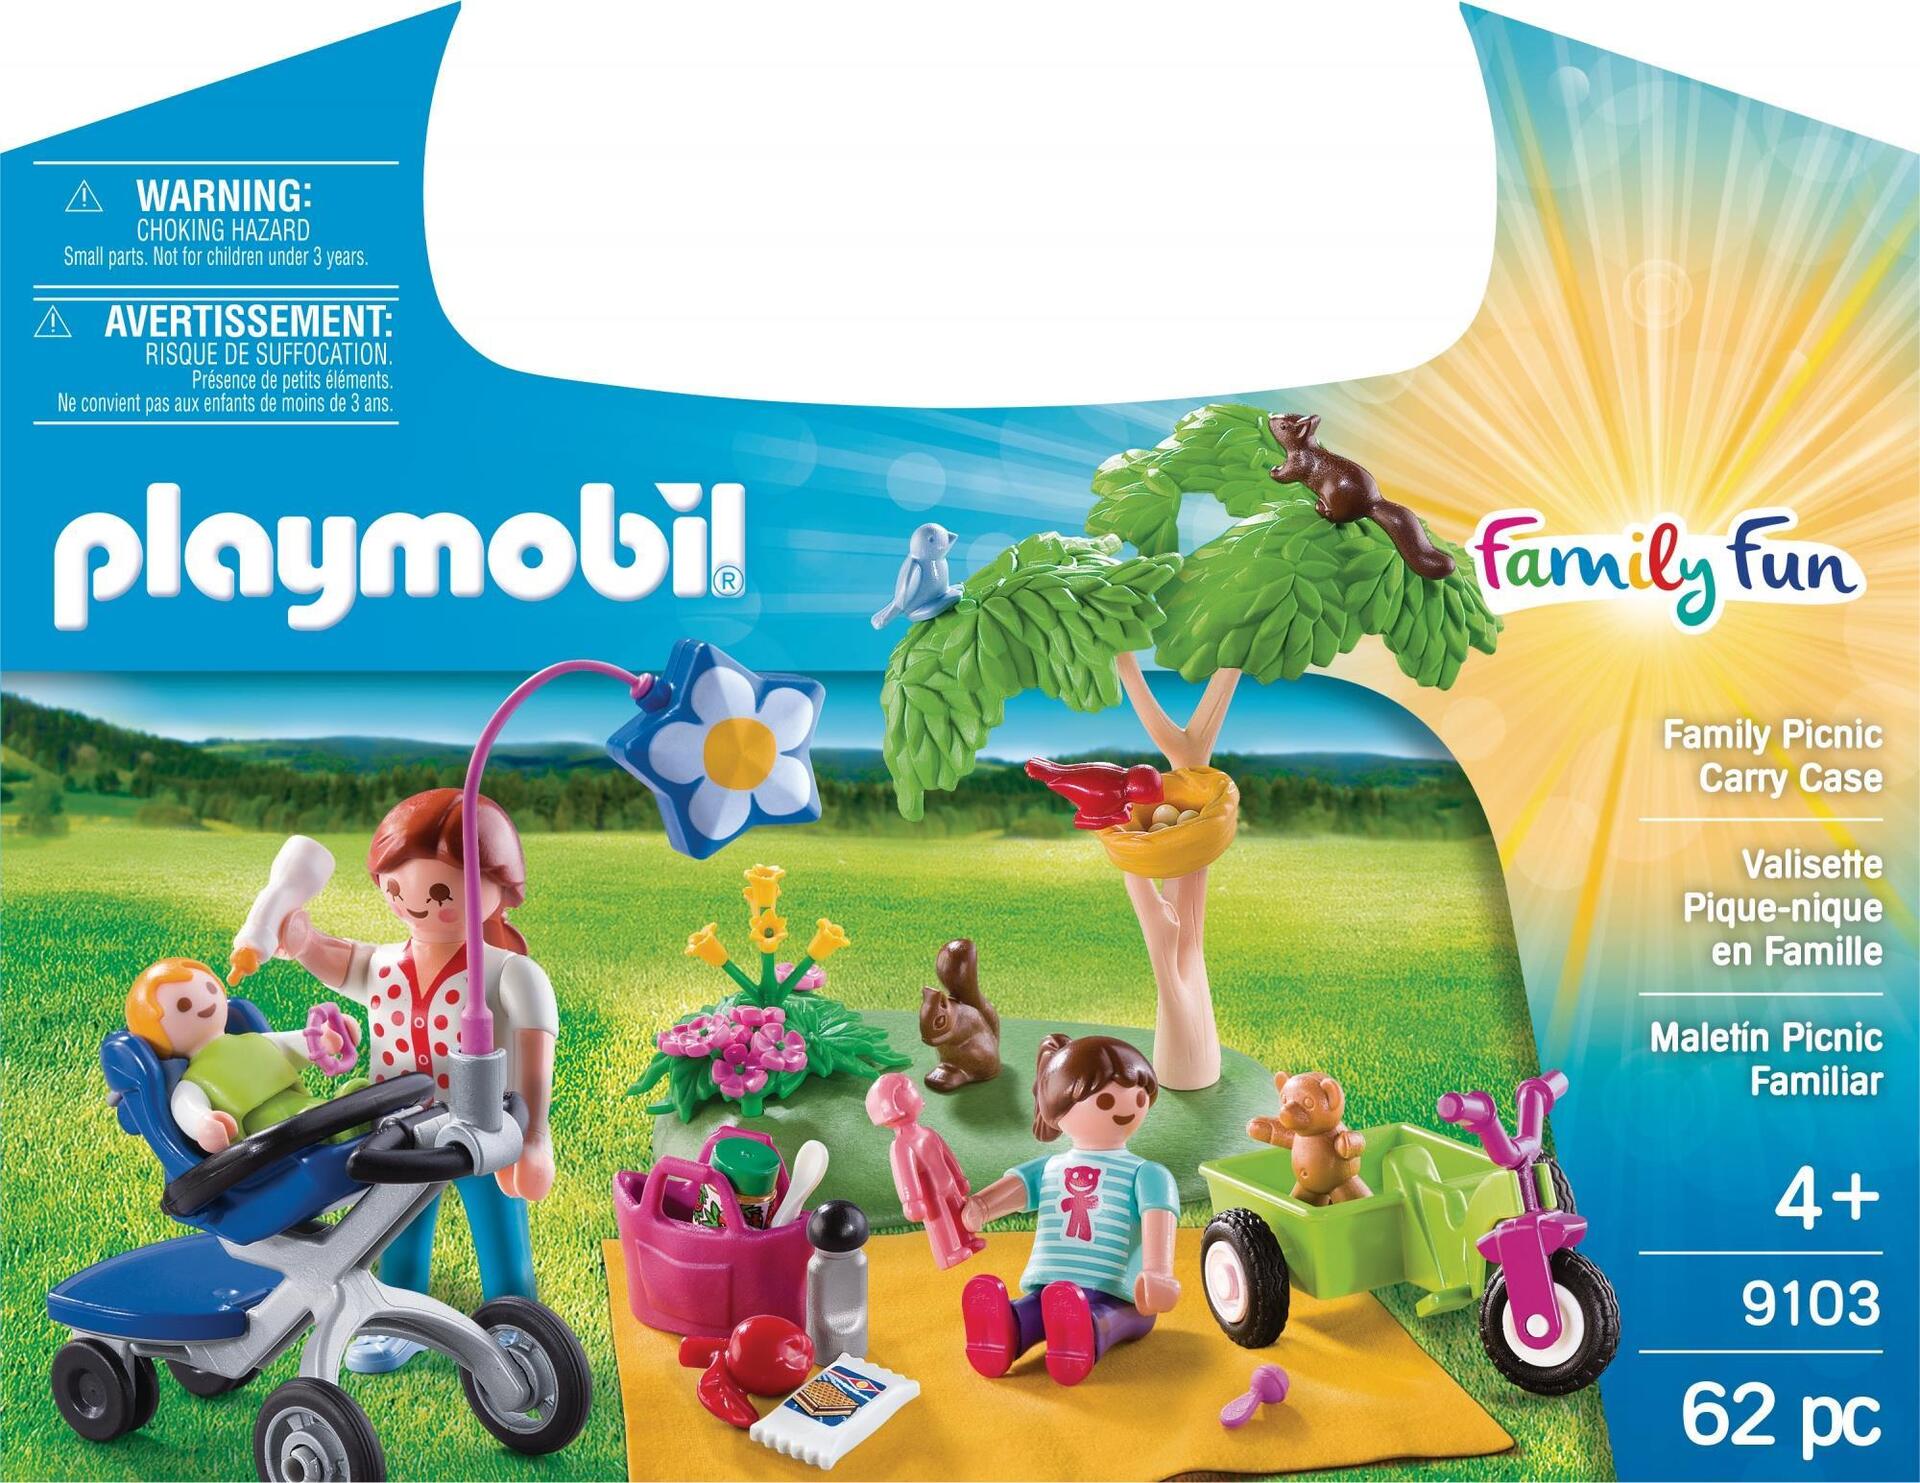 Playmobil FamilyFun 9103 (9103)